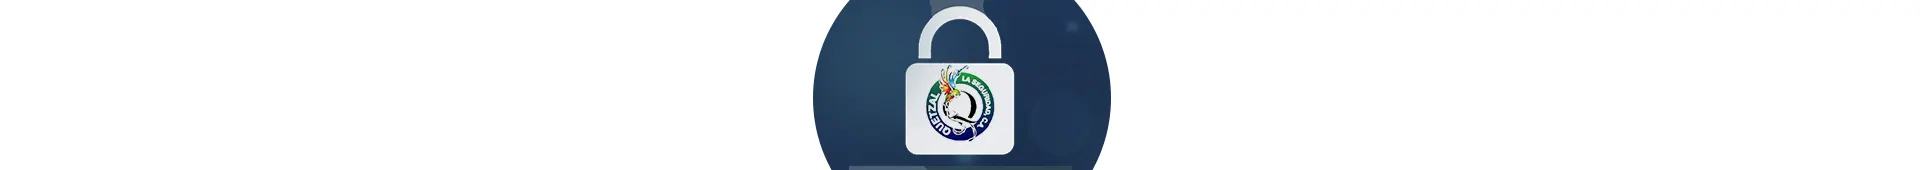 Imagen 1 del perfil de Quetzal La Seguridad